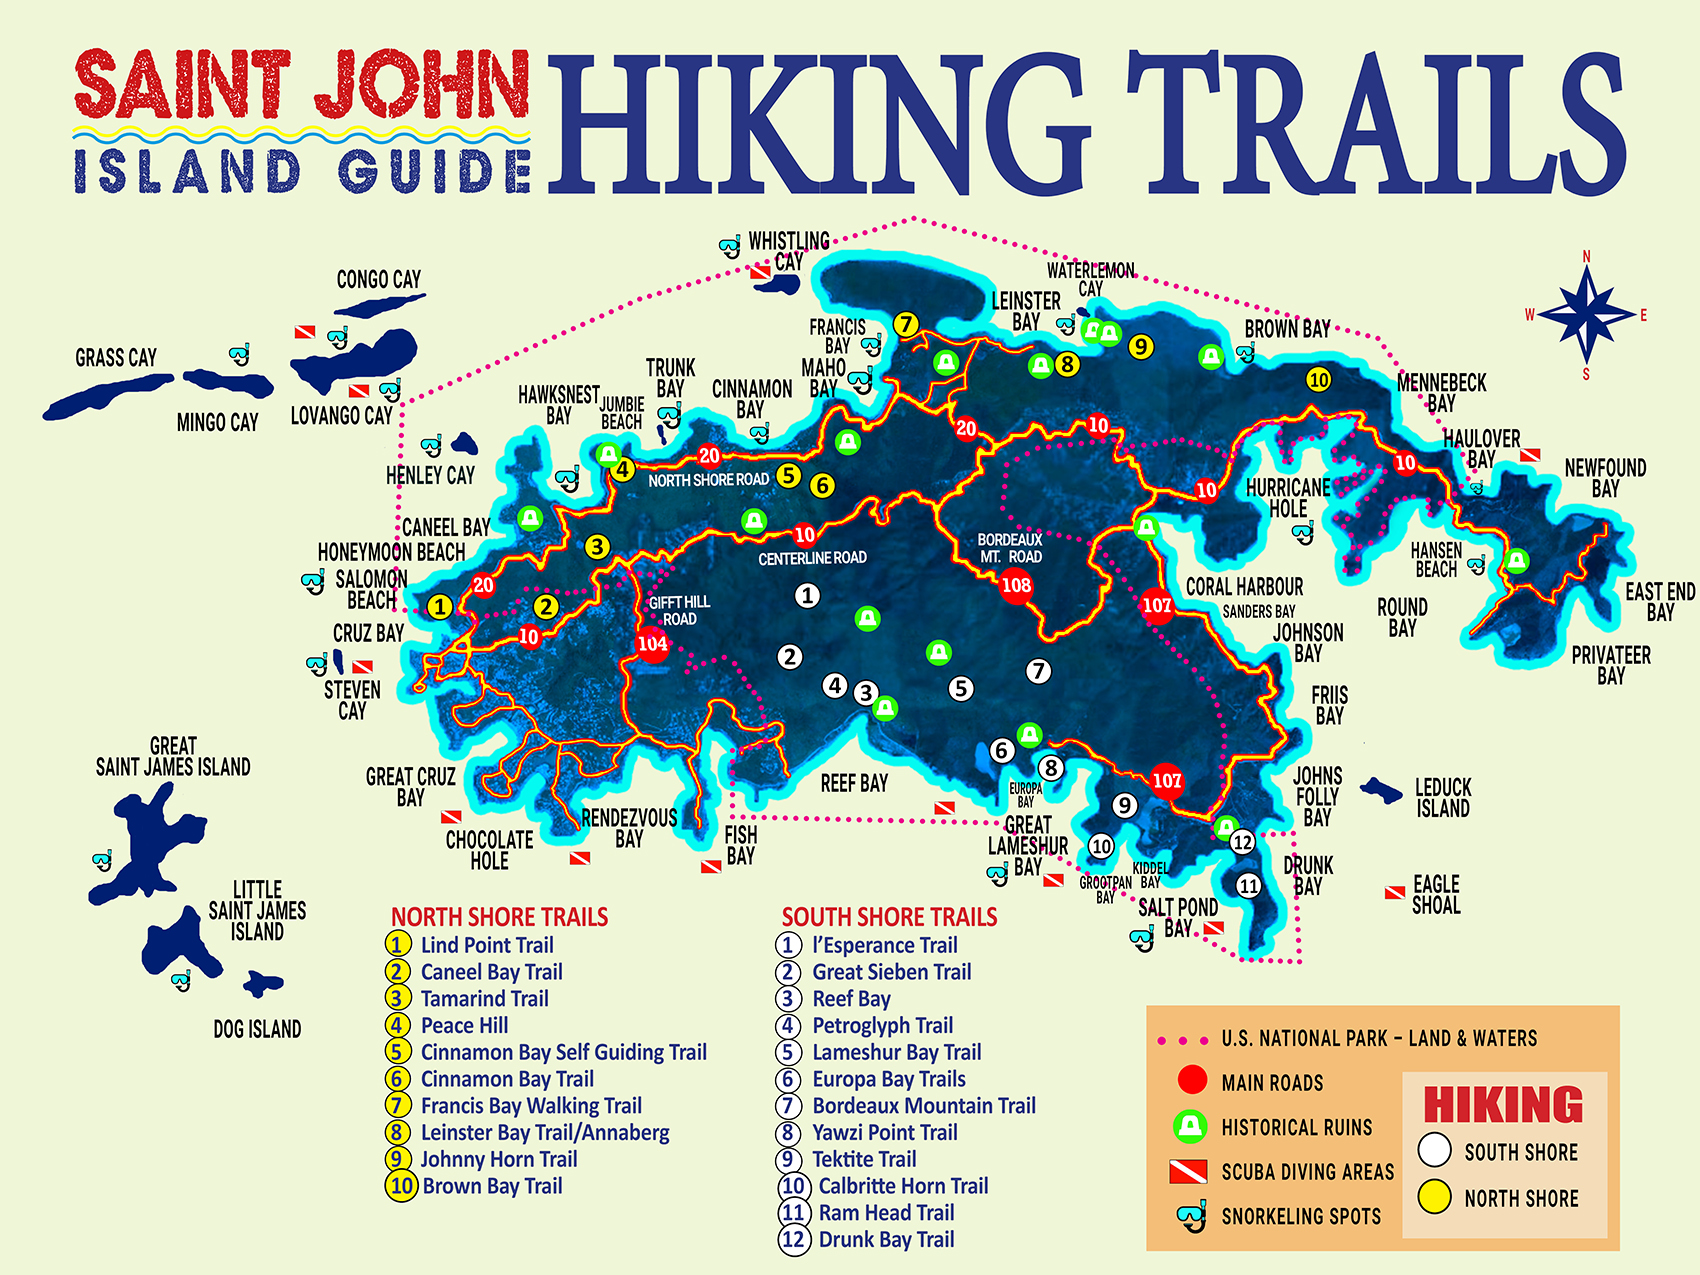 ST. JOHN HIKING TRAILS -- SAINT JOHN ISLAND GUIDE